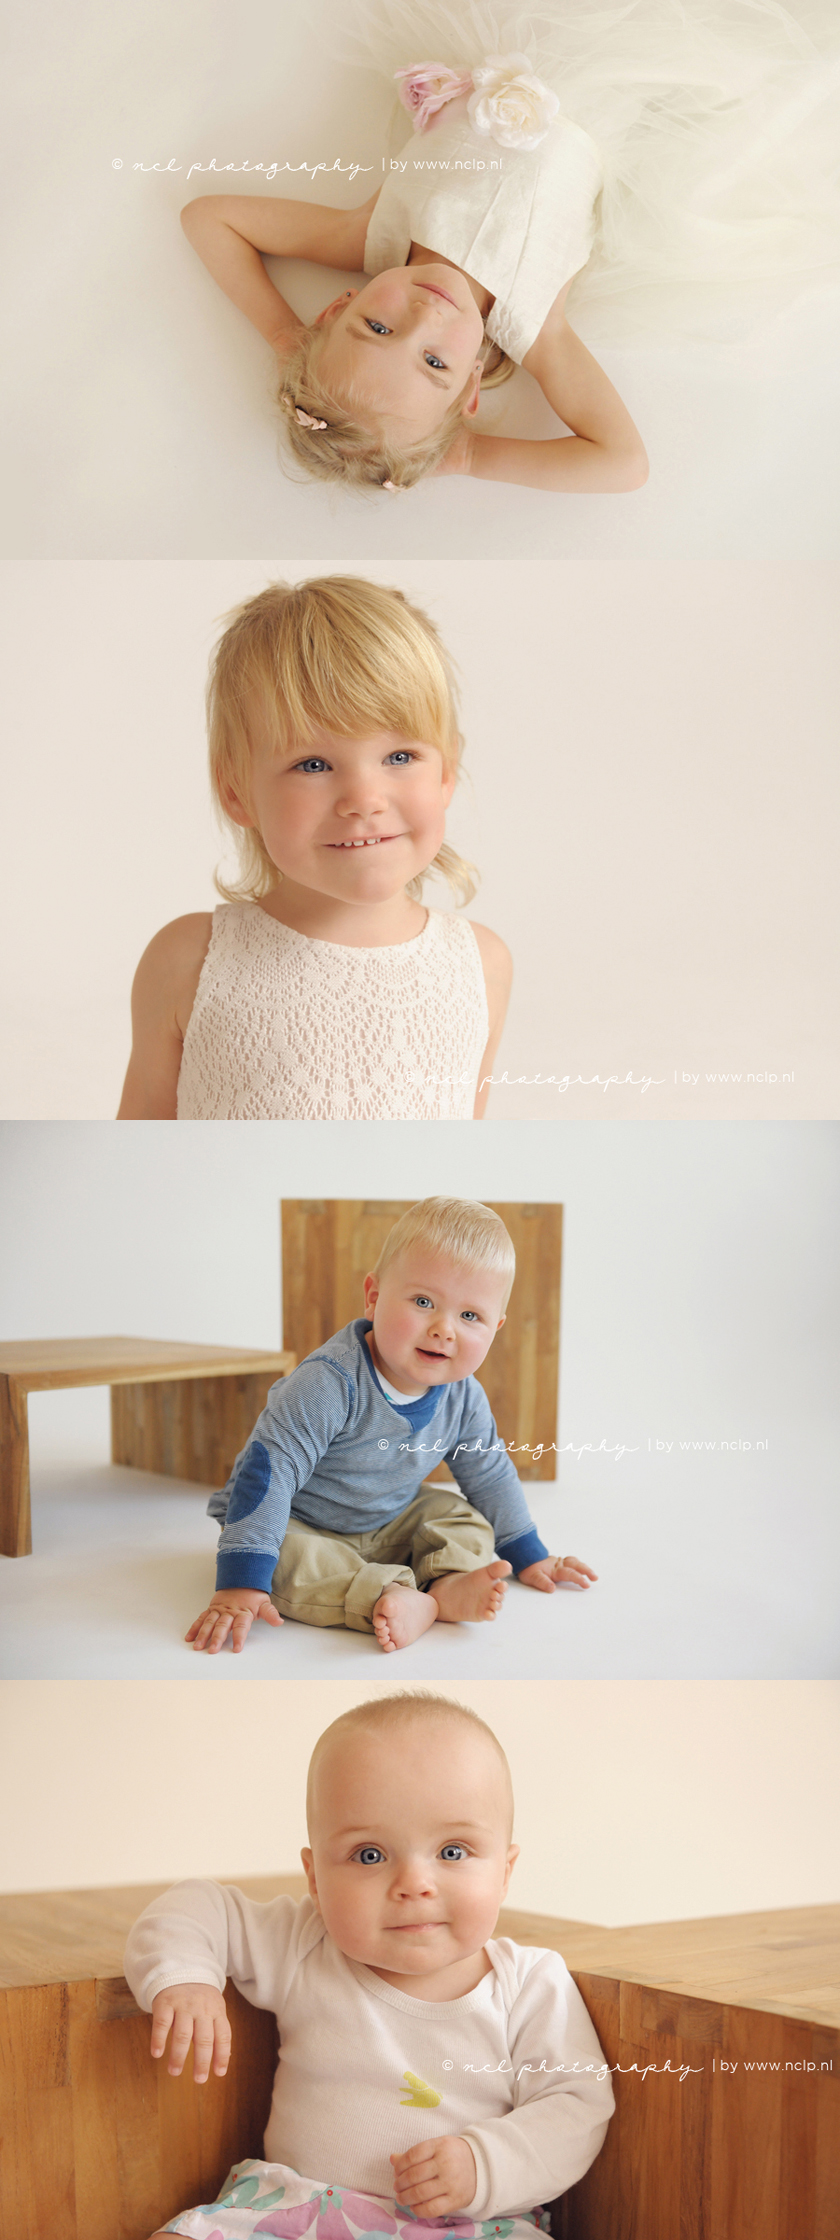 NCL Photography-amsterdam-children-fotograaf-babyfotografie-012